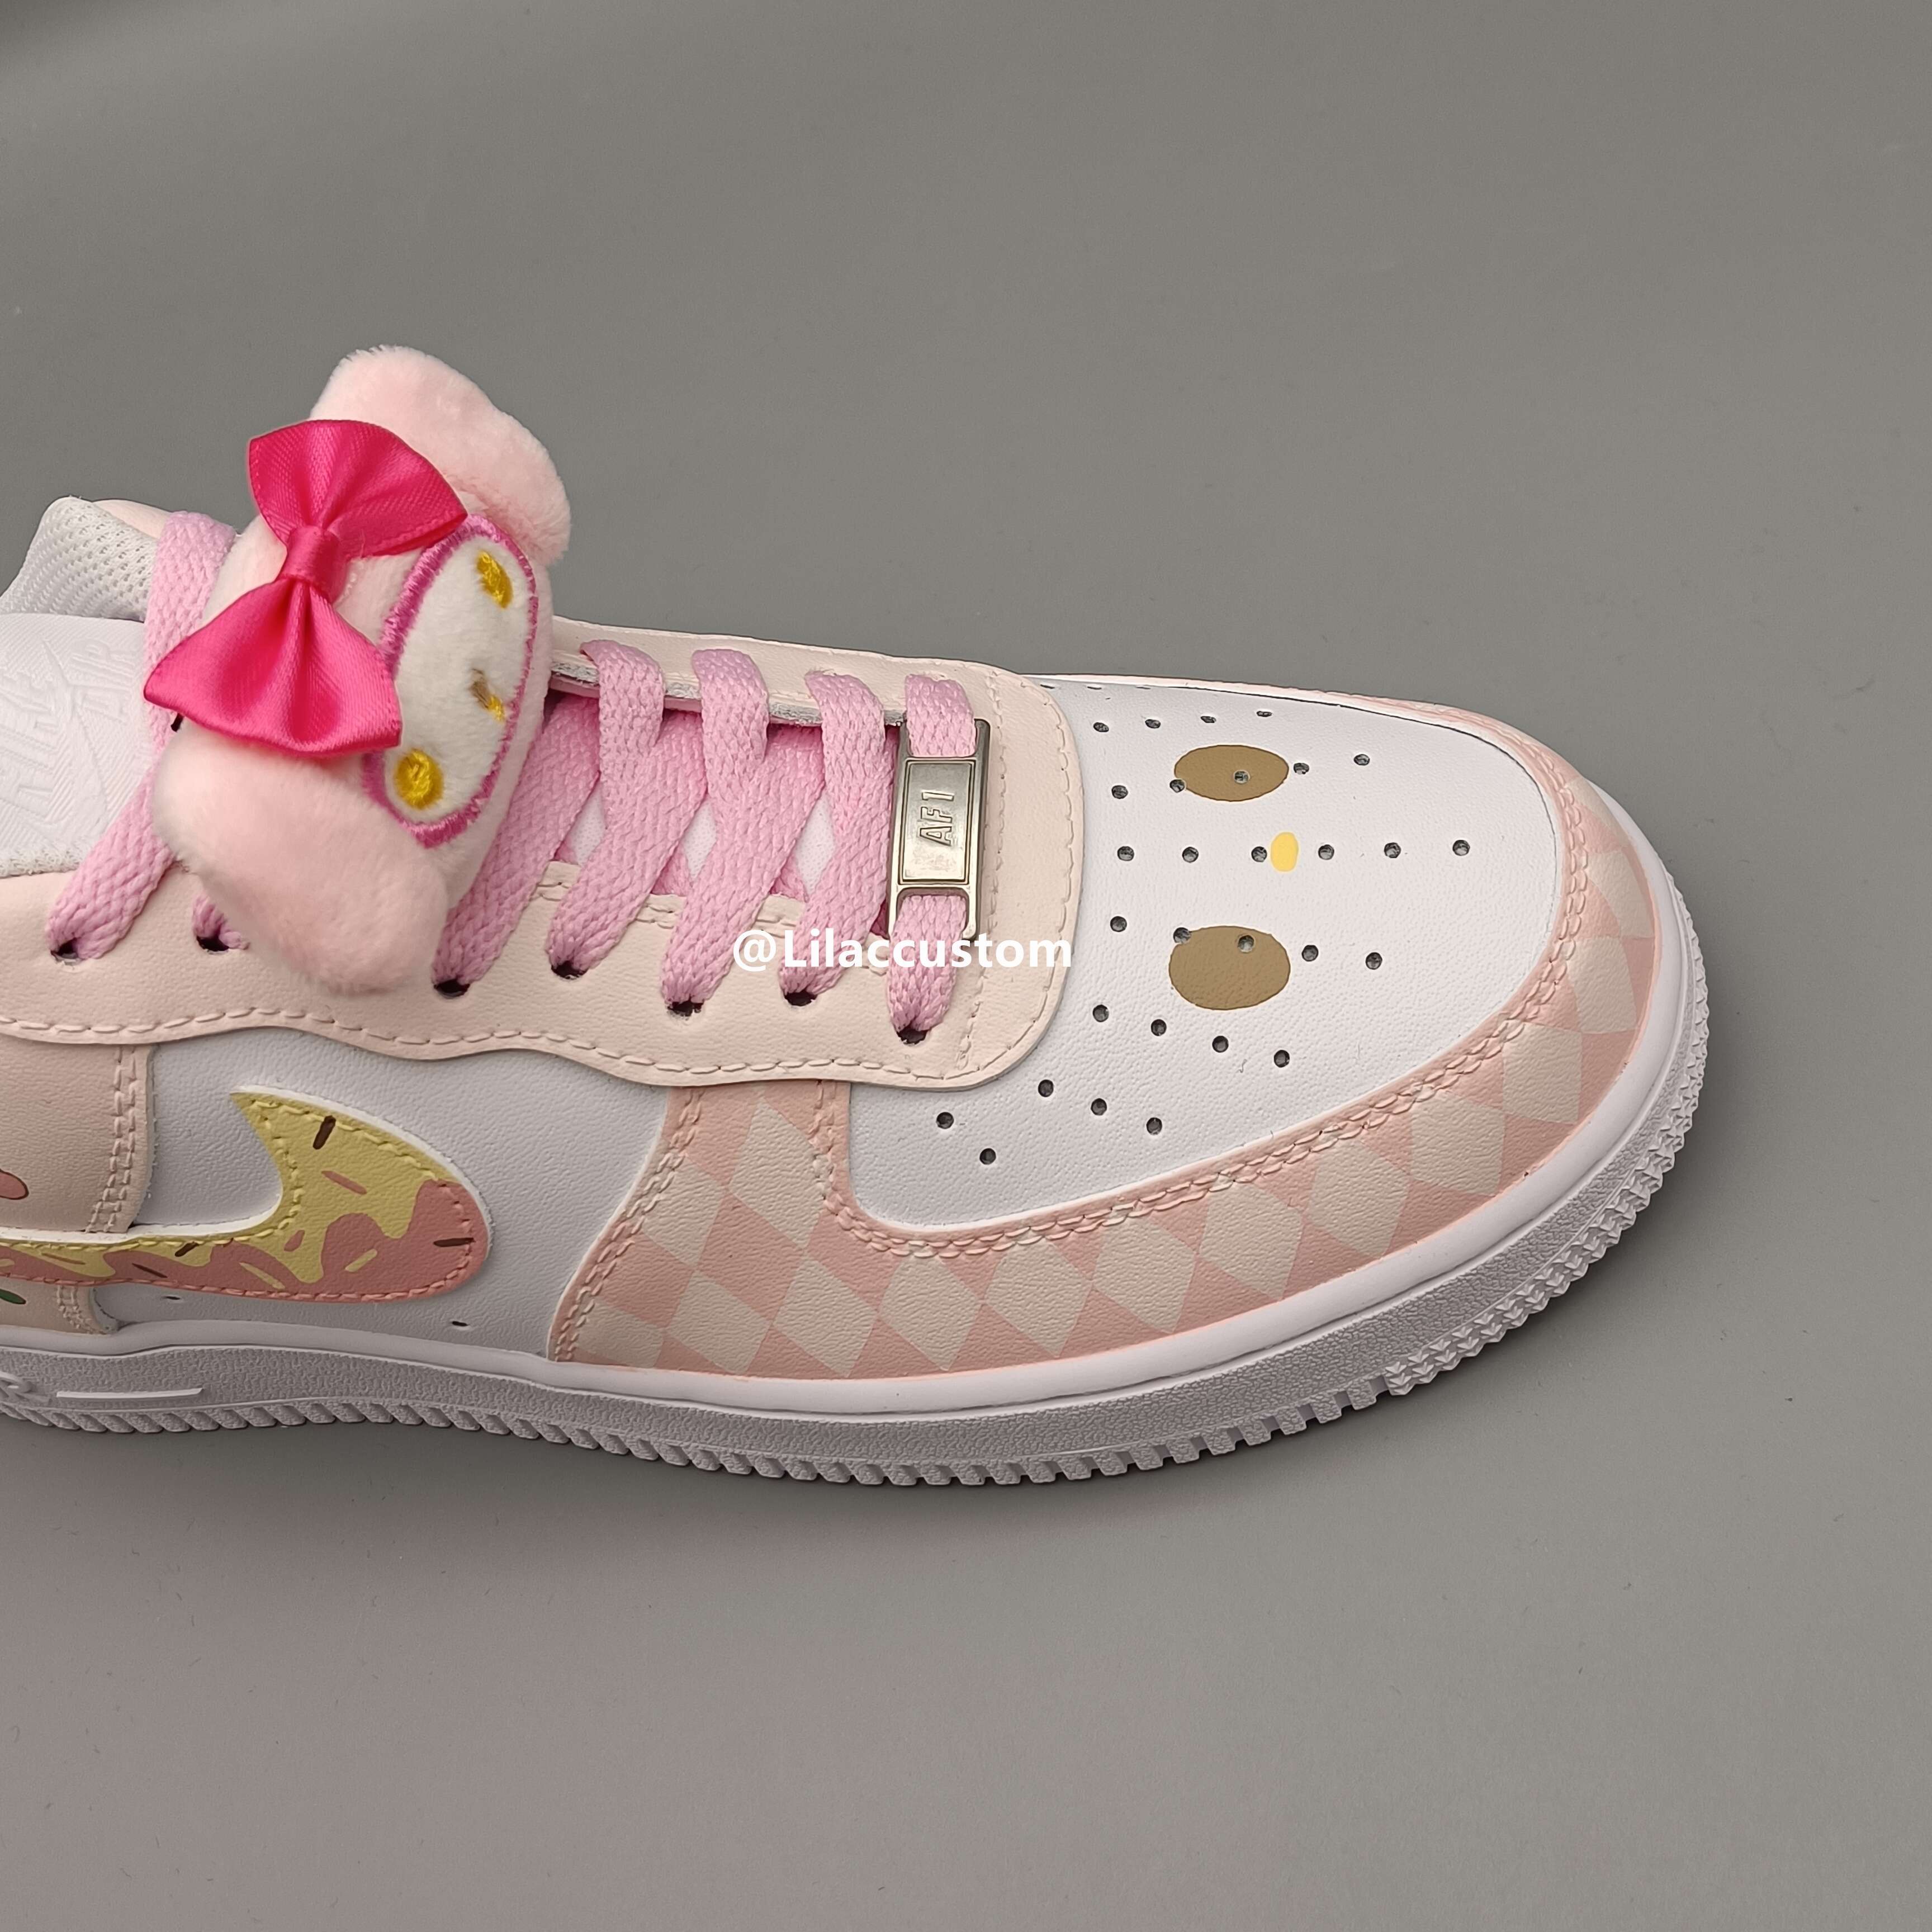 Nike Air Force 1 Pink Donut Cherry Custom